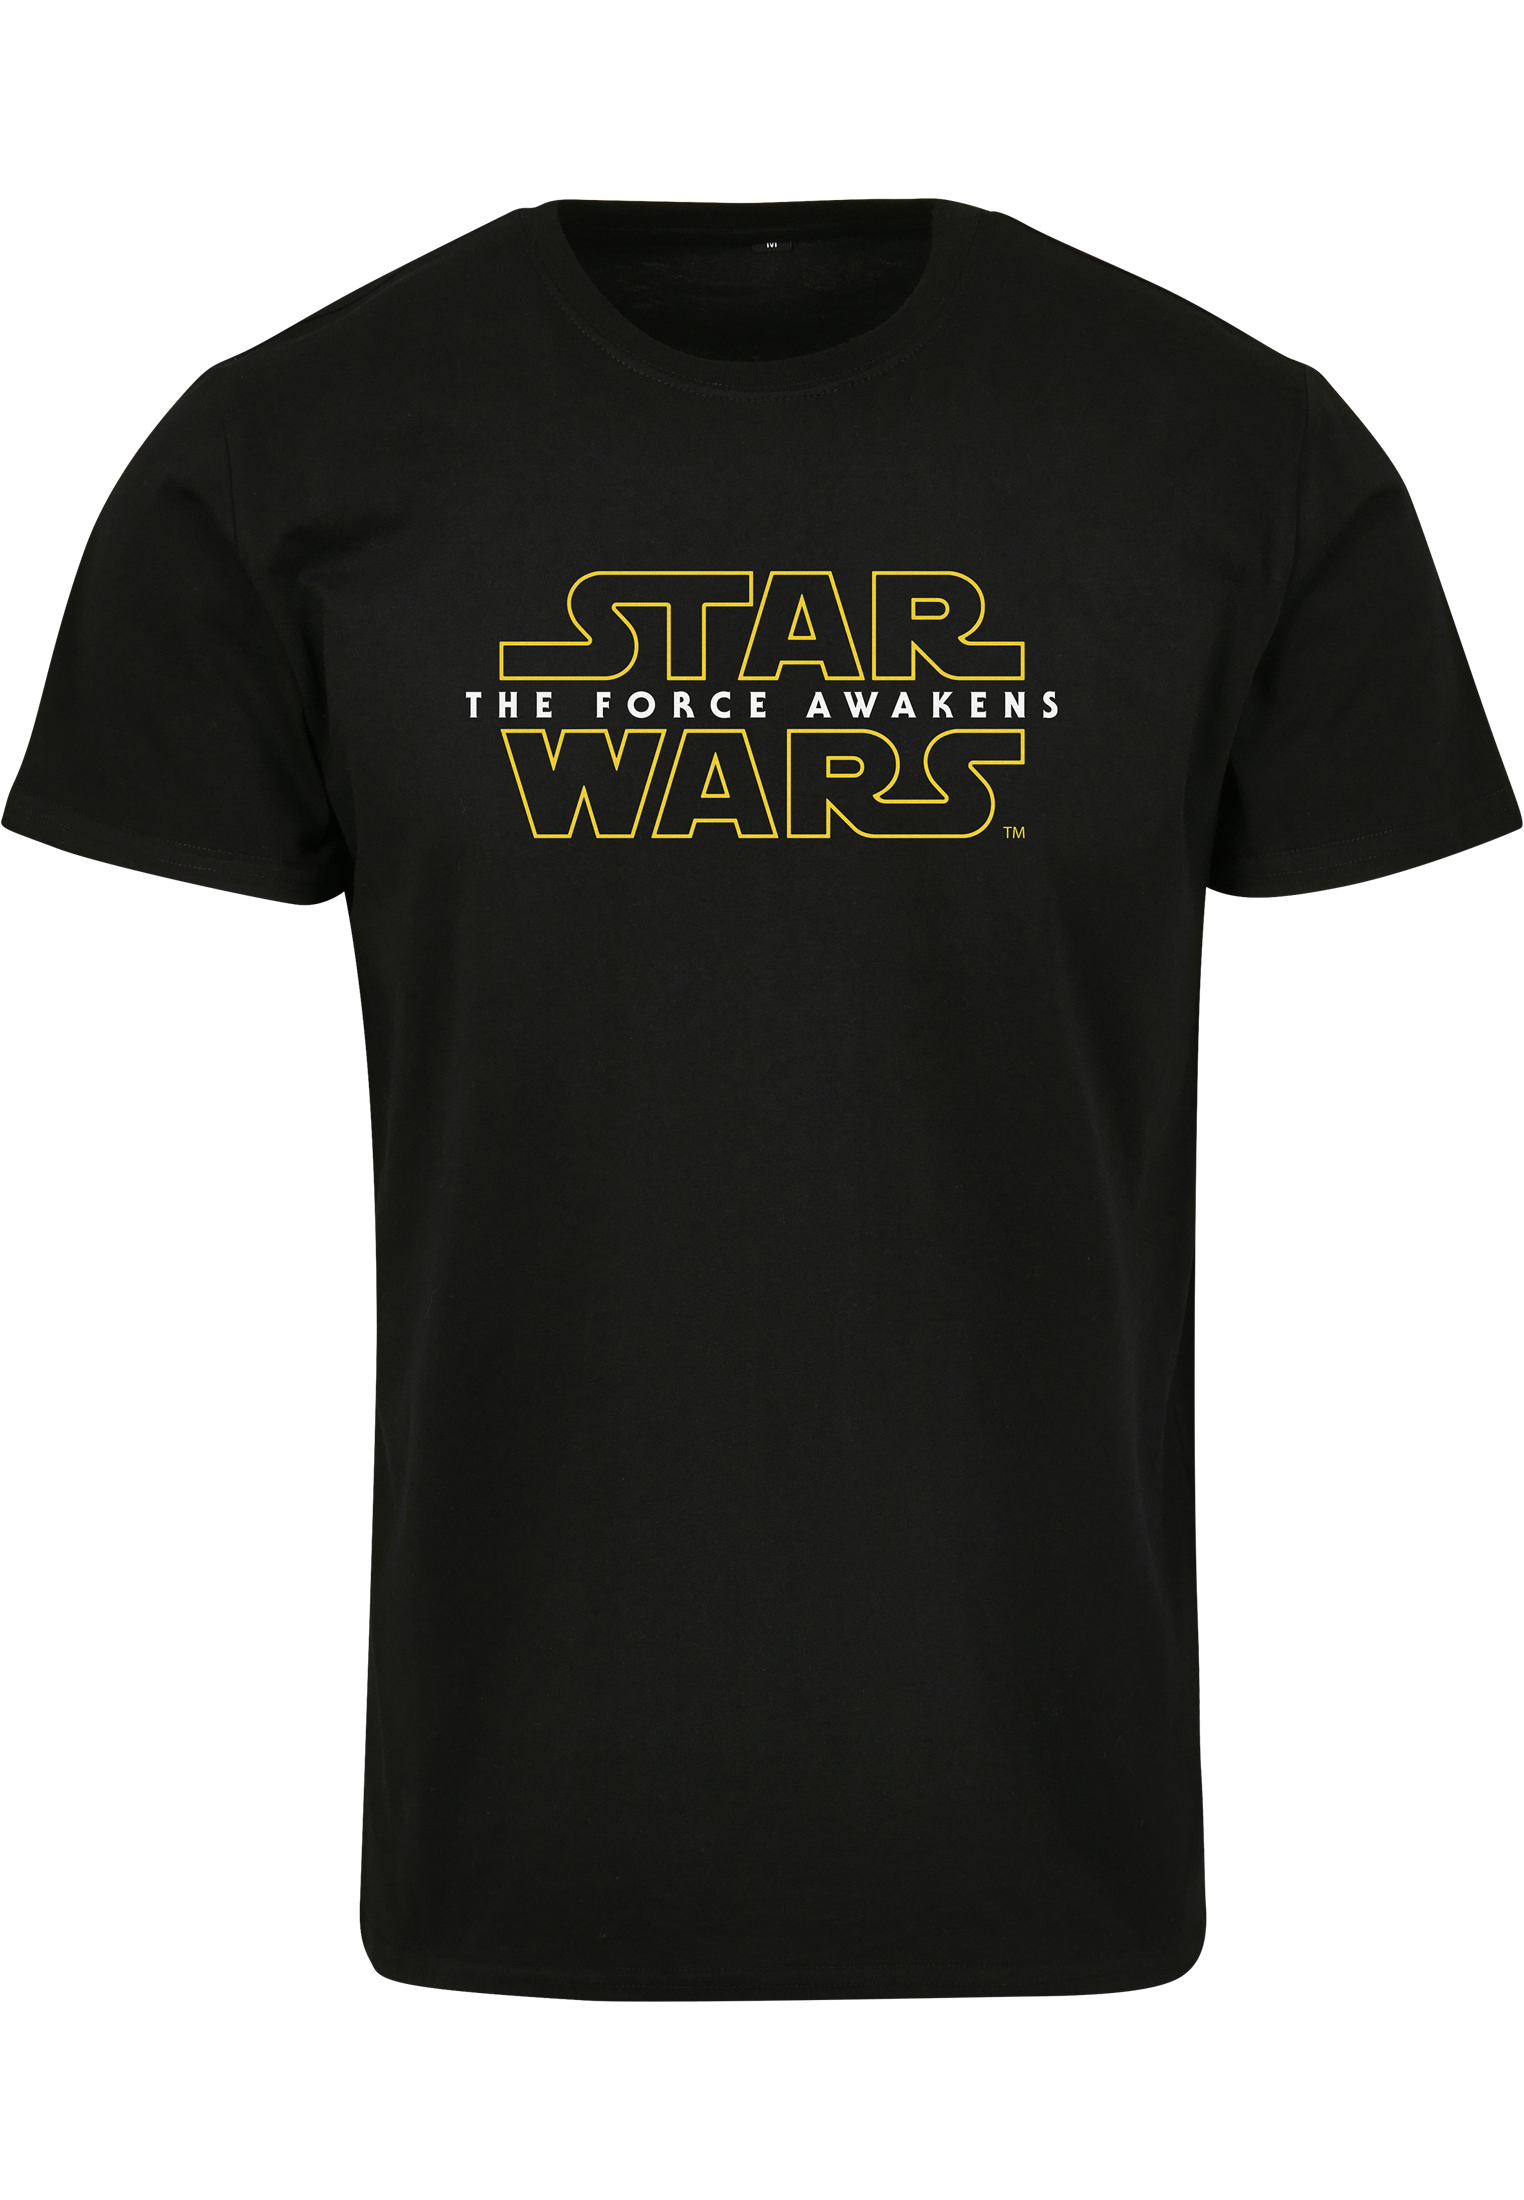 terrorist Vanaf daar Altaar Star Wars T shirts The Force met klassieke aftiteling op rugzijde - Hoodie  bedrukken